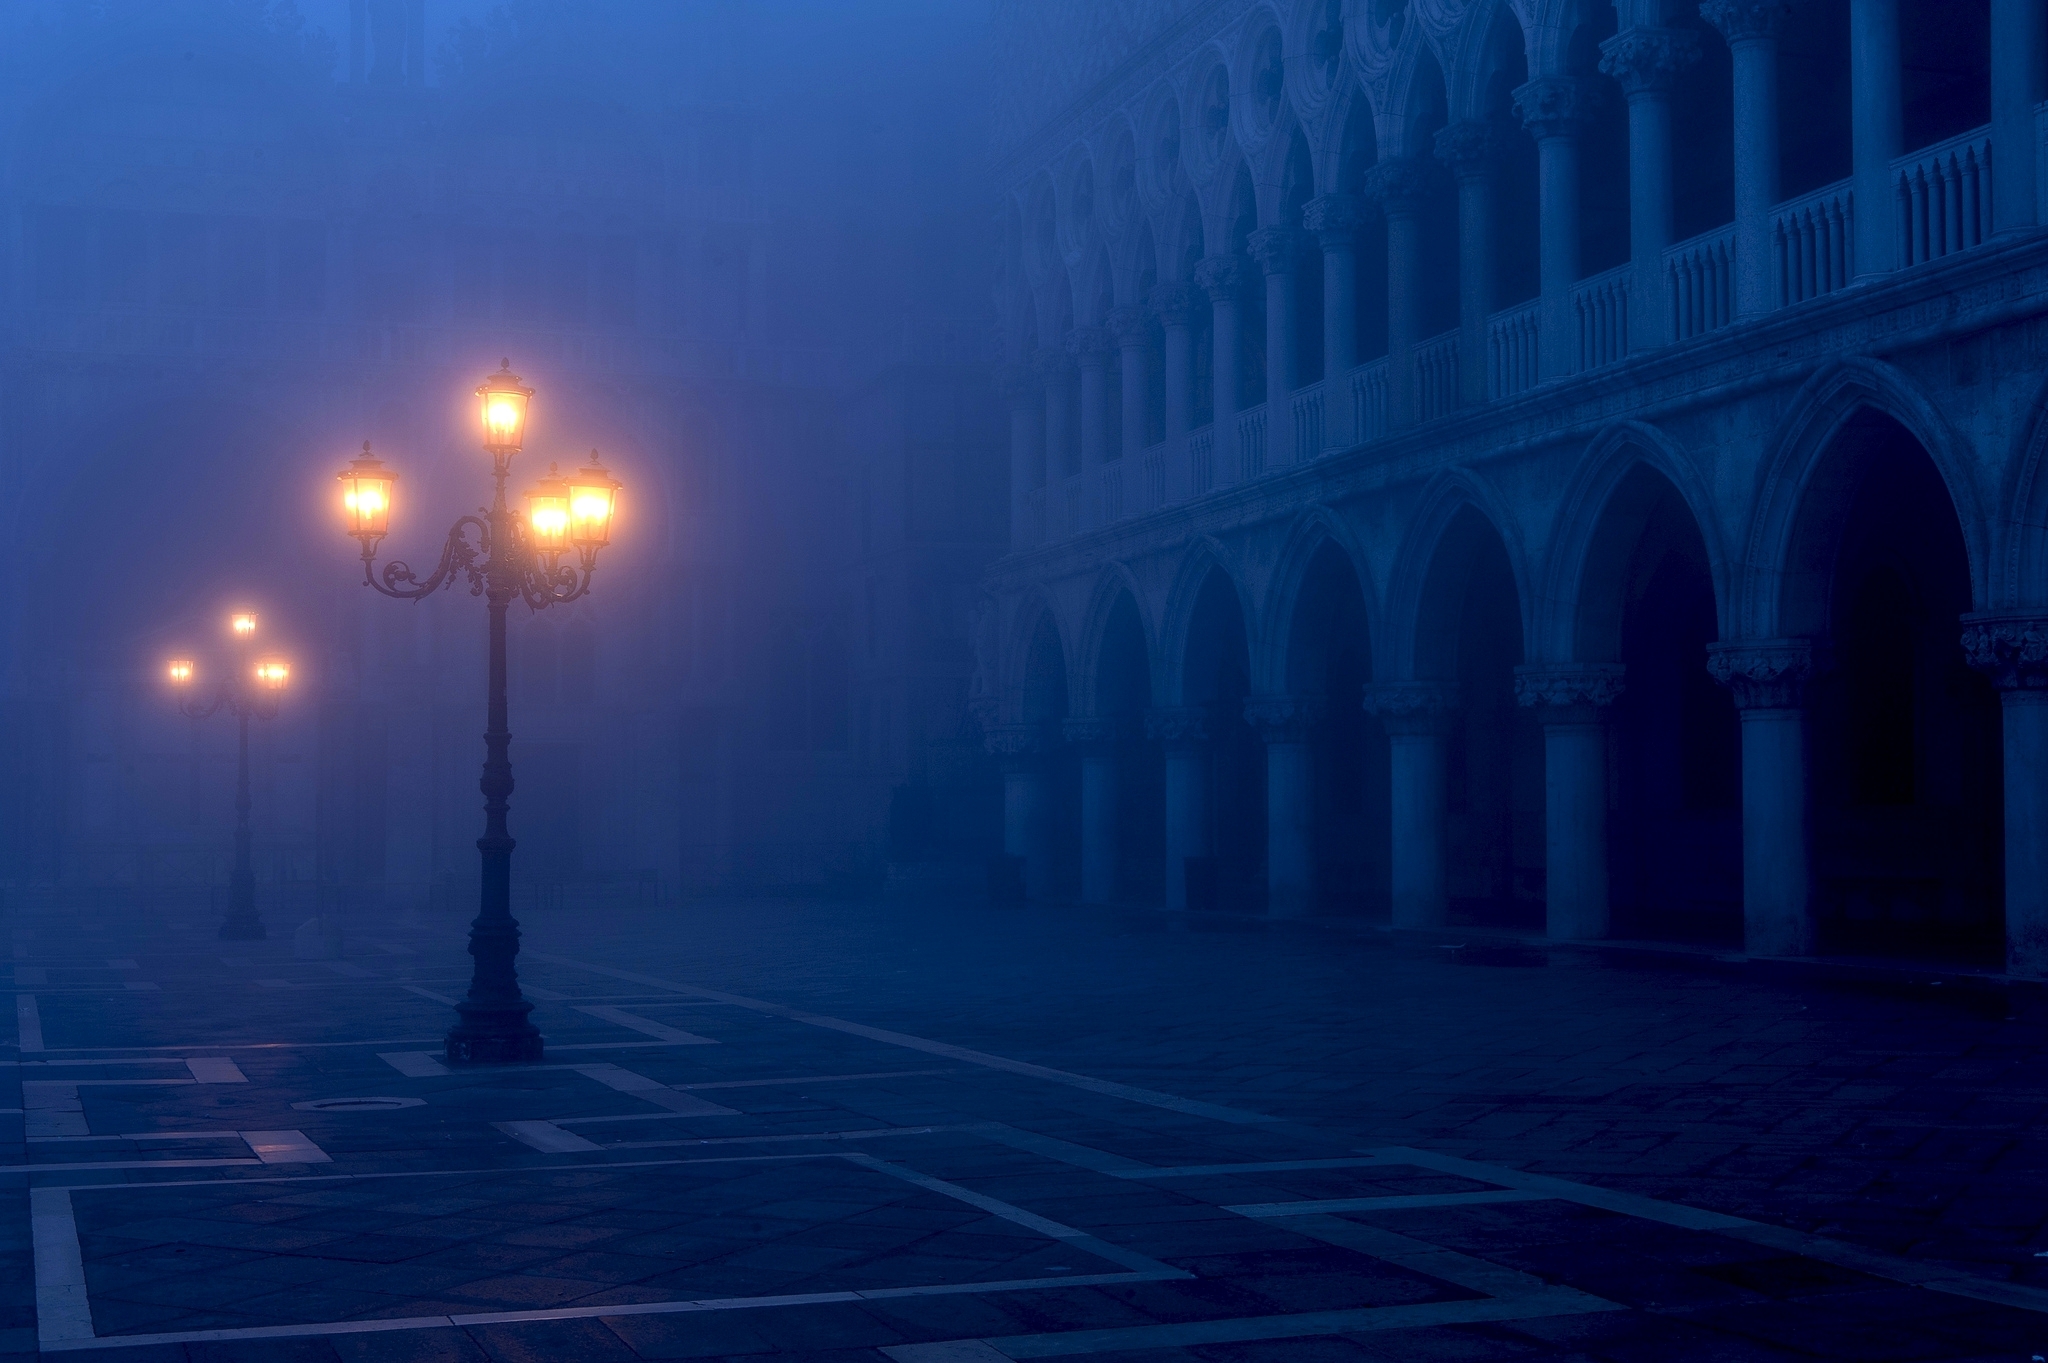 Город туман вечер. Площадь Сан Марко в Венеции в тумане. Ночная улица с фонарями. Ночная улица с фонарями в тумане. Темная улица с фонарями.